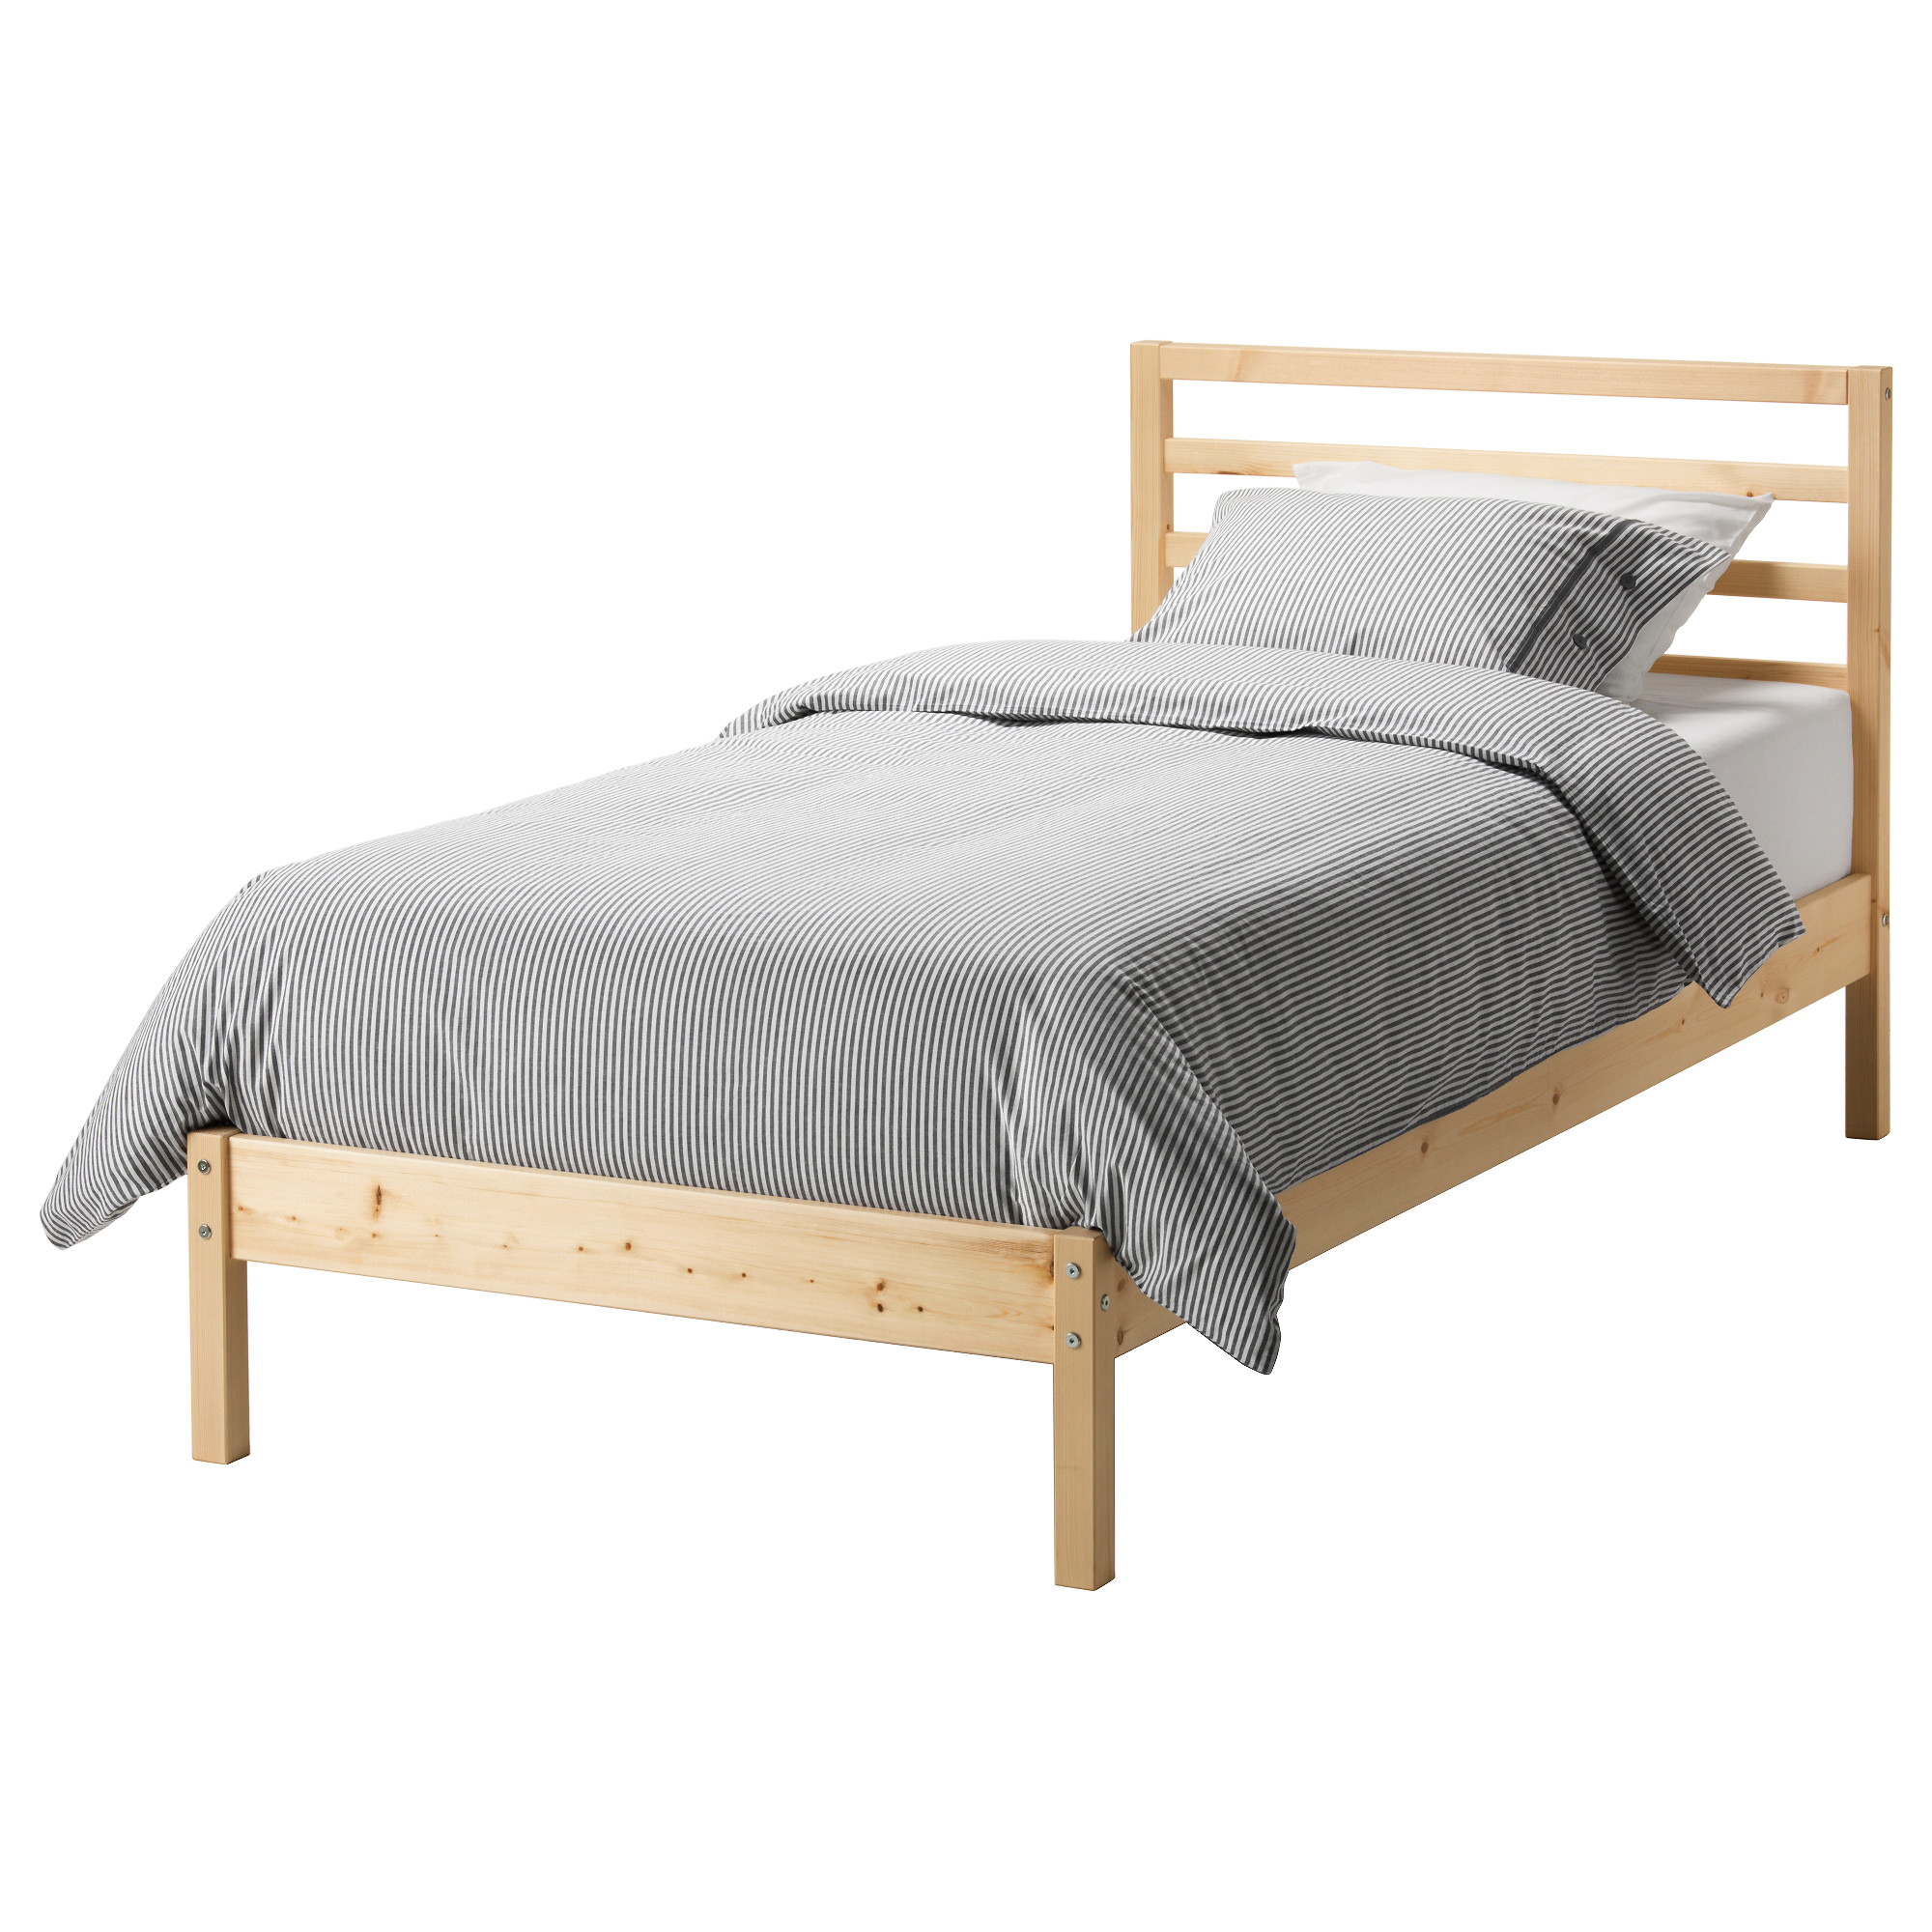 Luxury TARVA Bed frame - IKEA twin bed frame